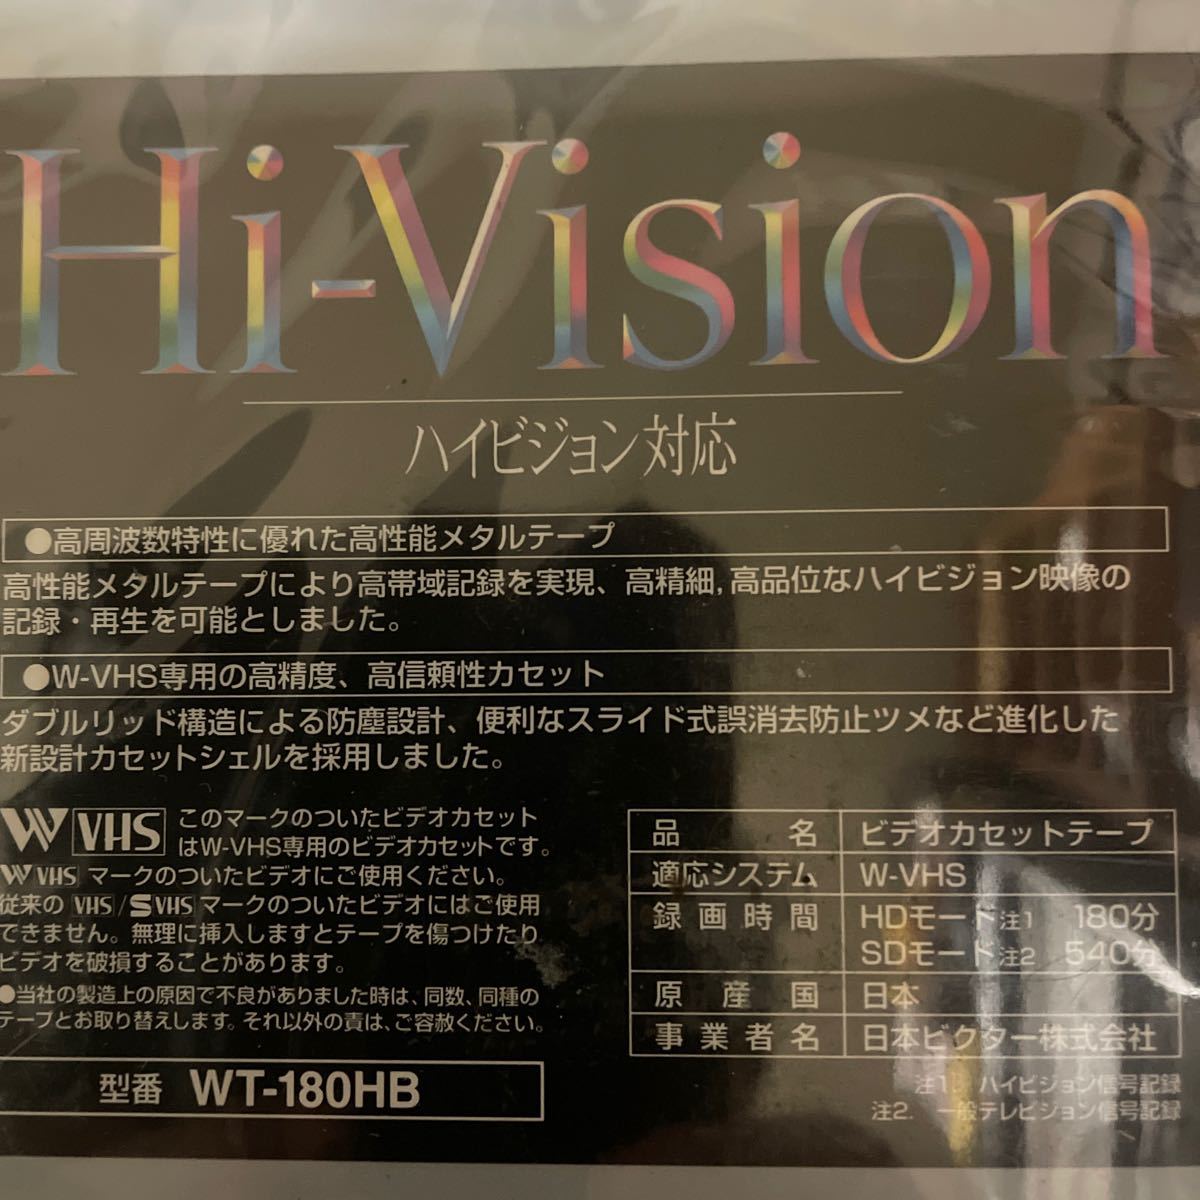 VHSテープ 日本ビクター W-VHSビデオカセットテープ ハイビジョン対応 180分 [WT-180HB] 新品未開封_画像4